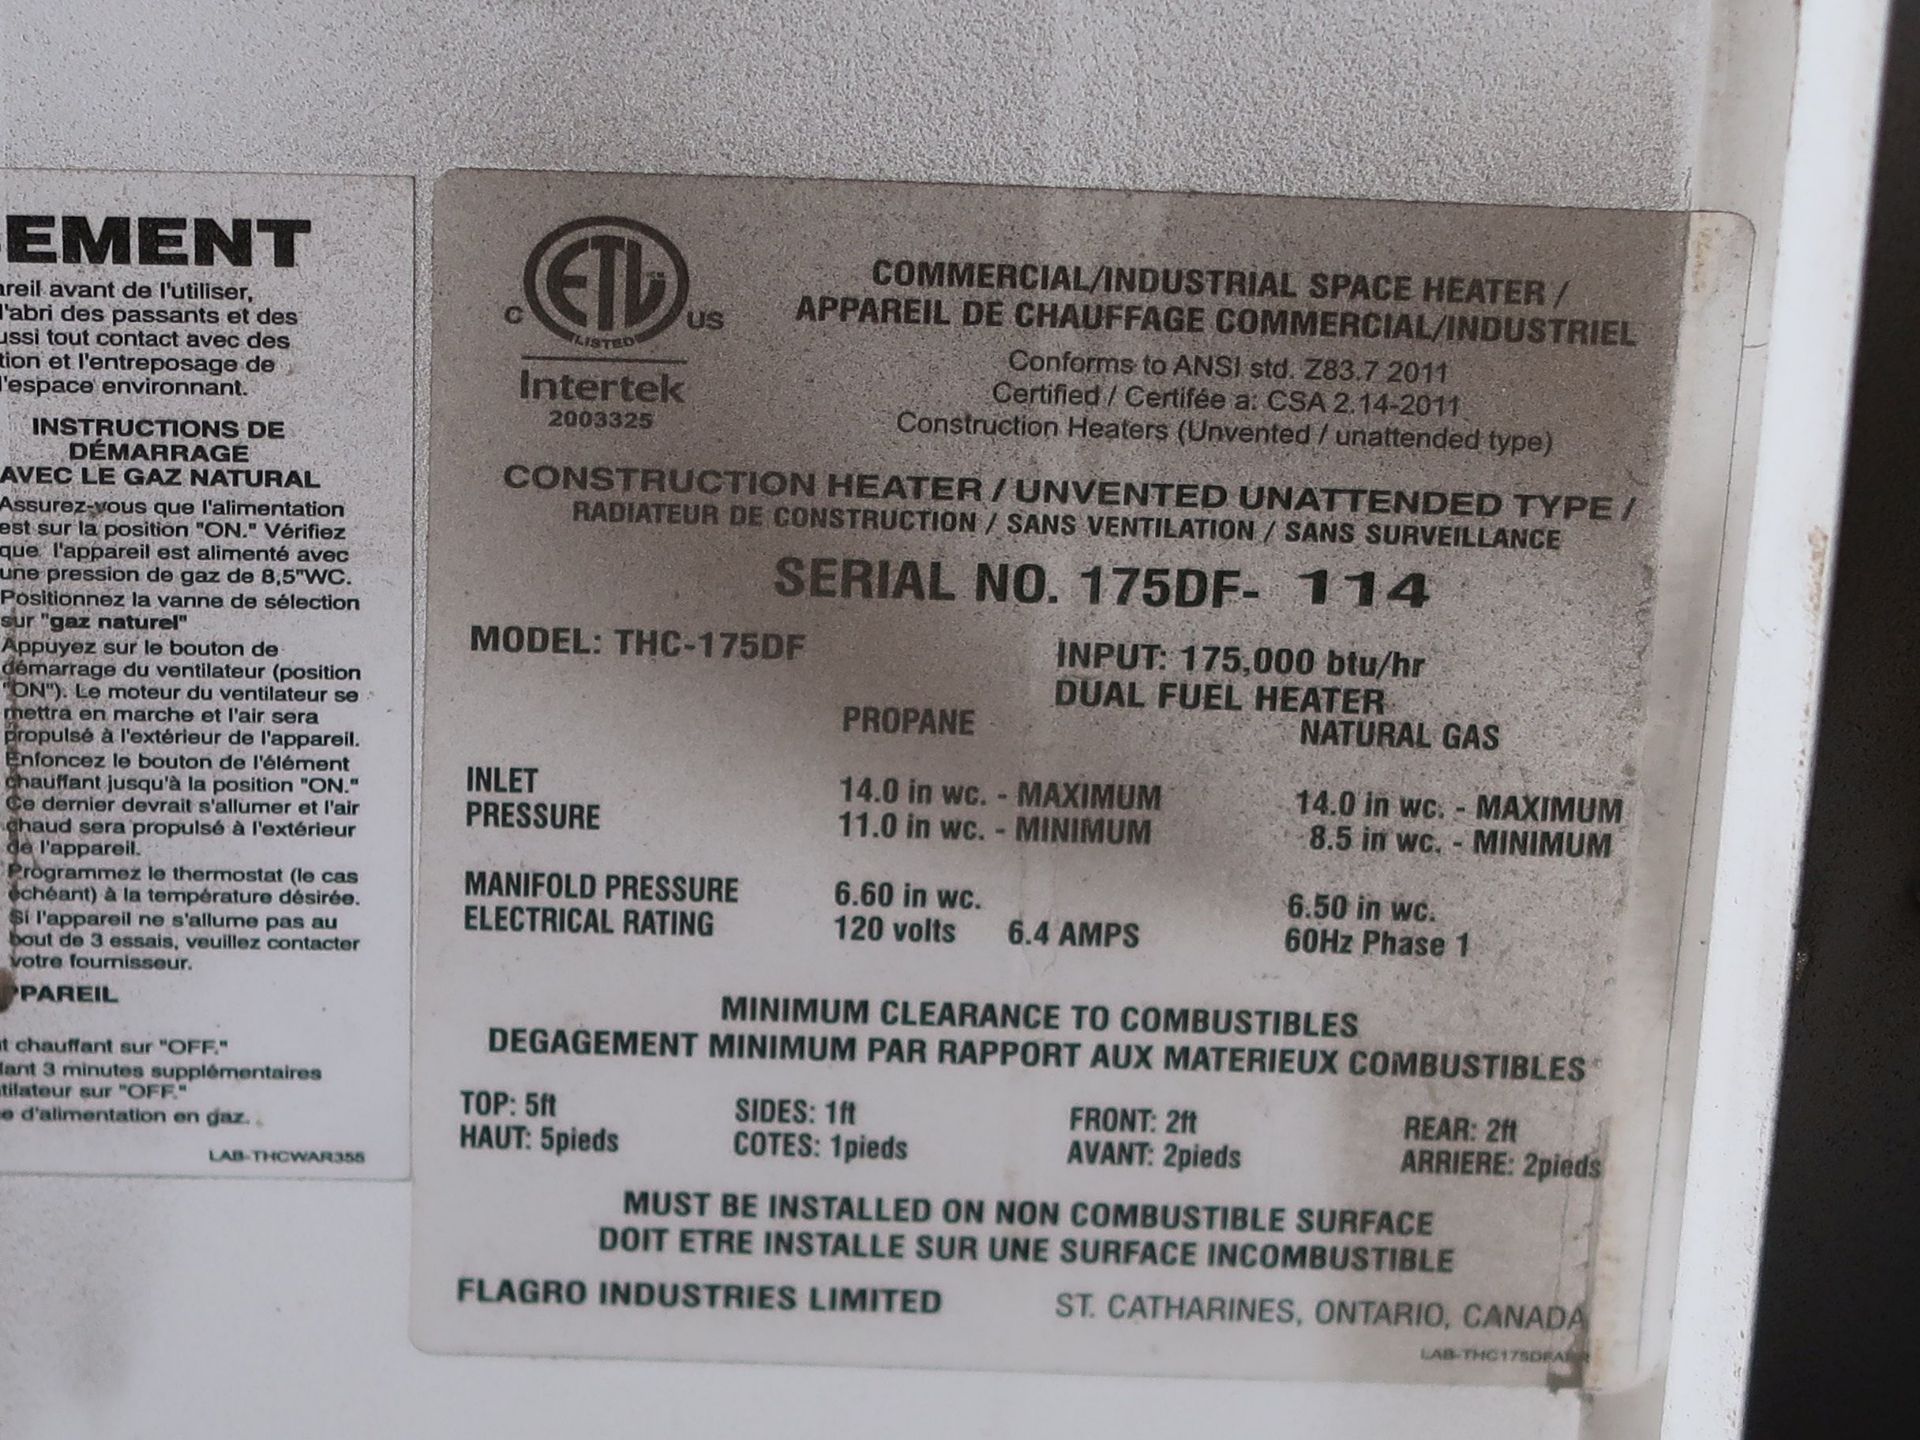 FLARGO MODEL THC-175DF PORTABLE DUAL FUEL HEATER, NATURAL GAS/PROPANE, 17,500 BTU - Image 3 of 4